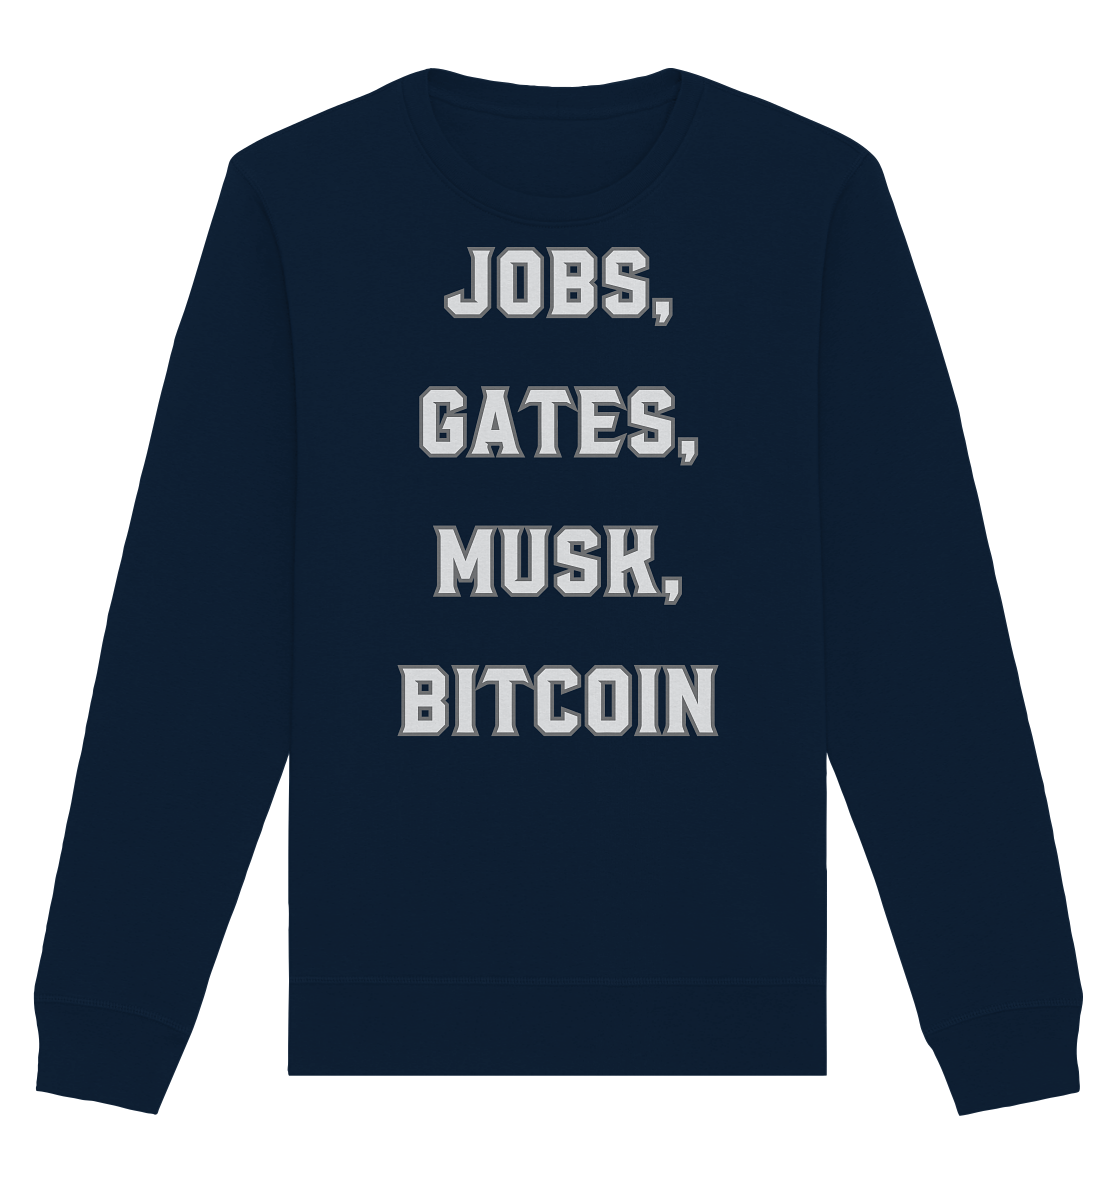 Steve Jobs, Bill Gates, Elon Musk, BITCOIN - Organic Basic Unisex Sweatshirt